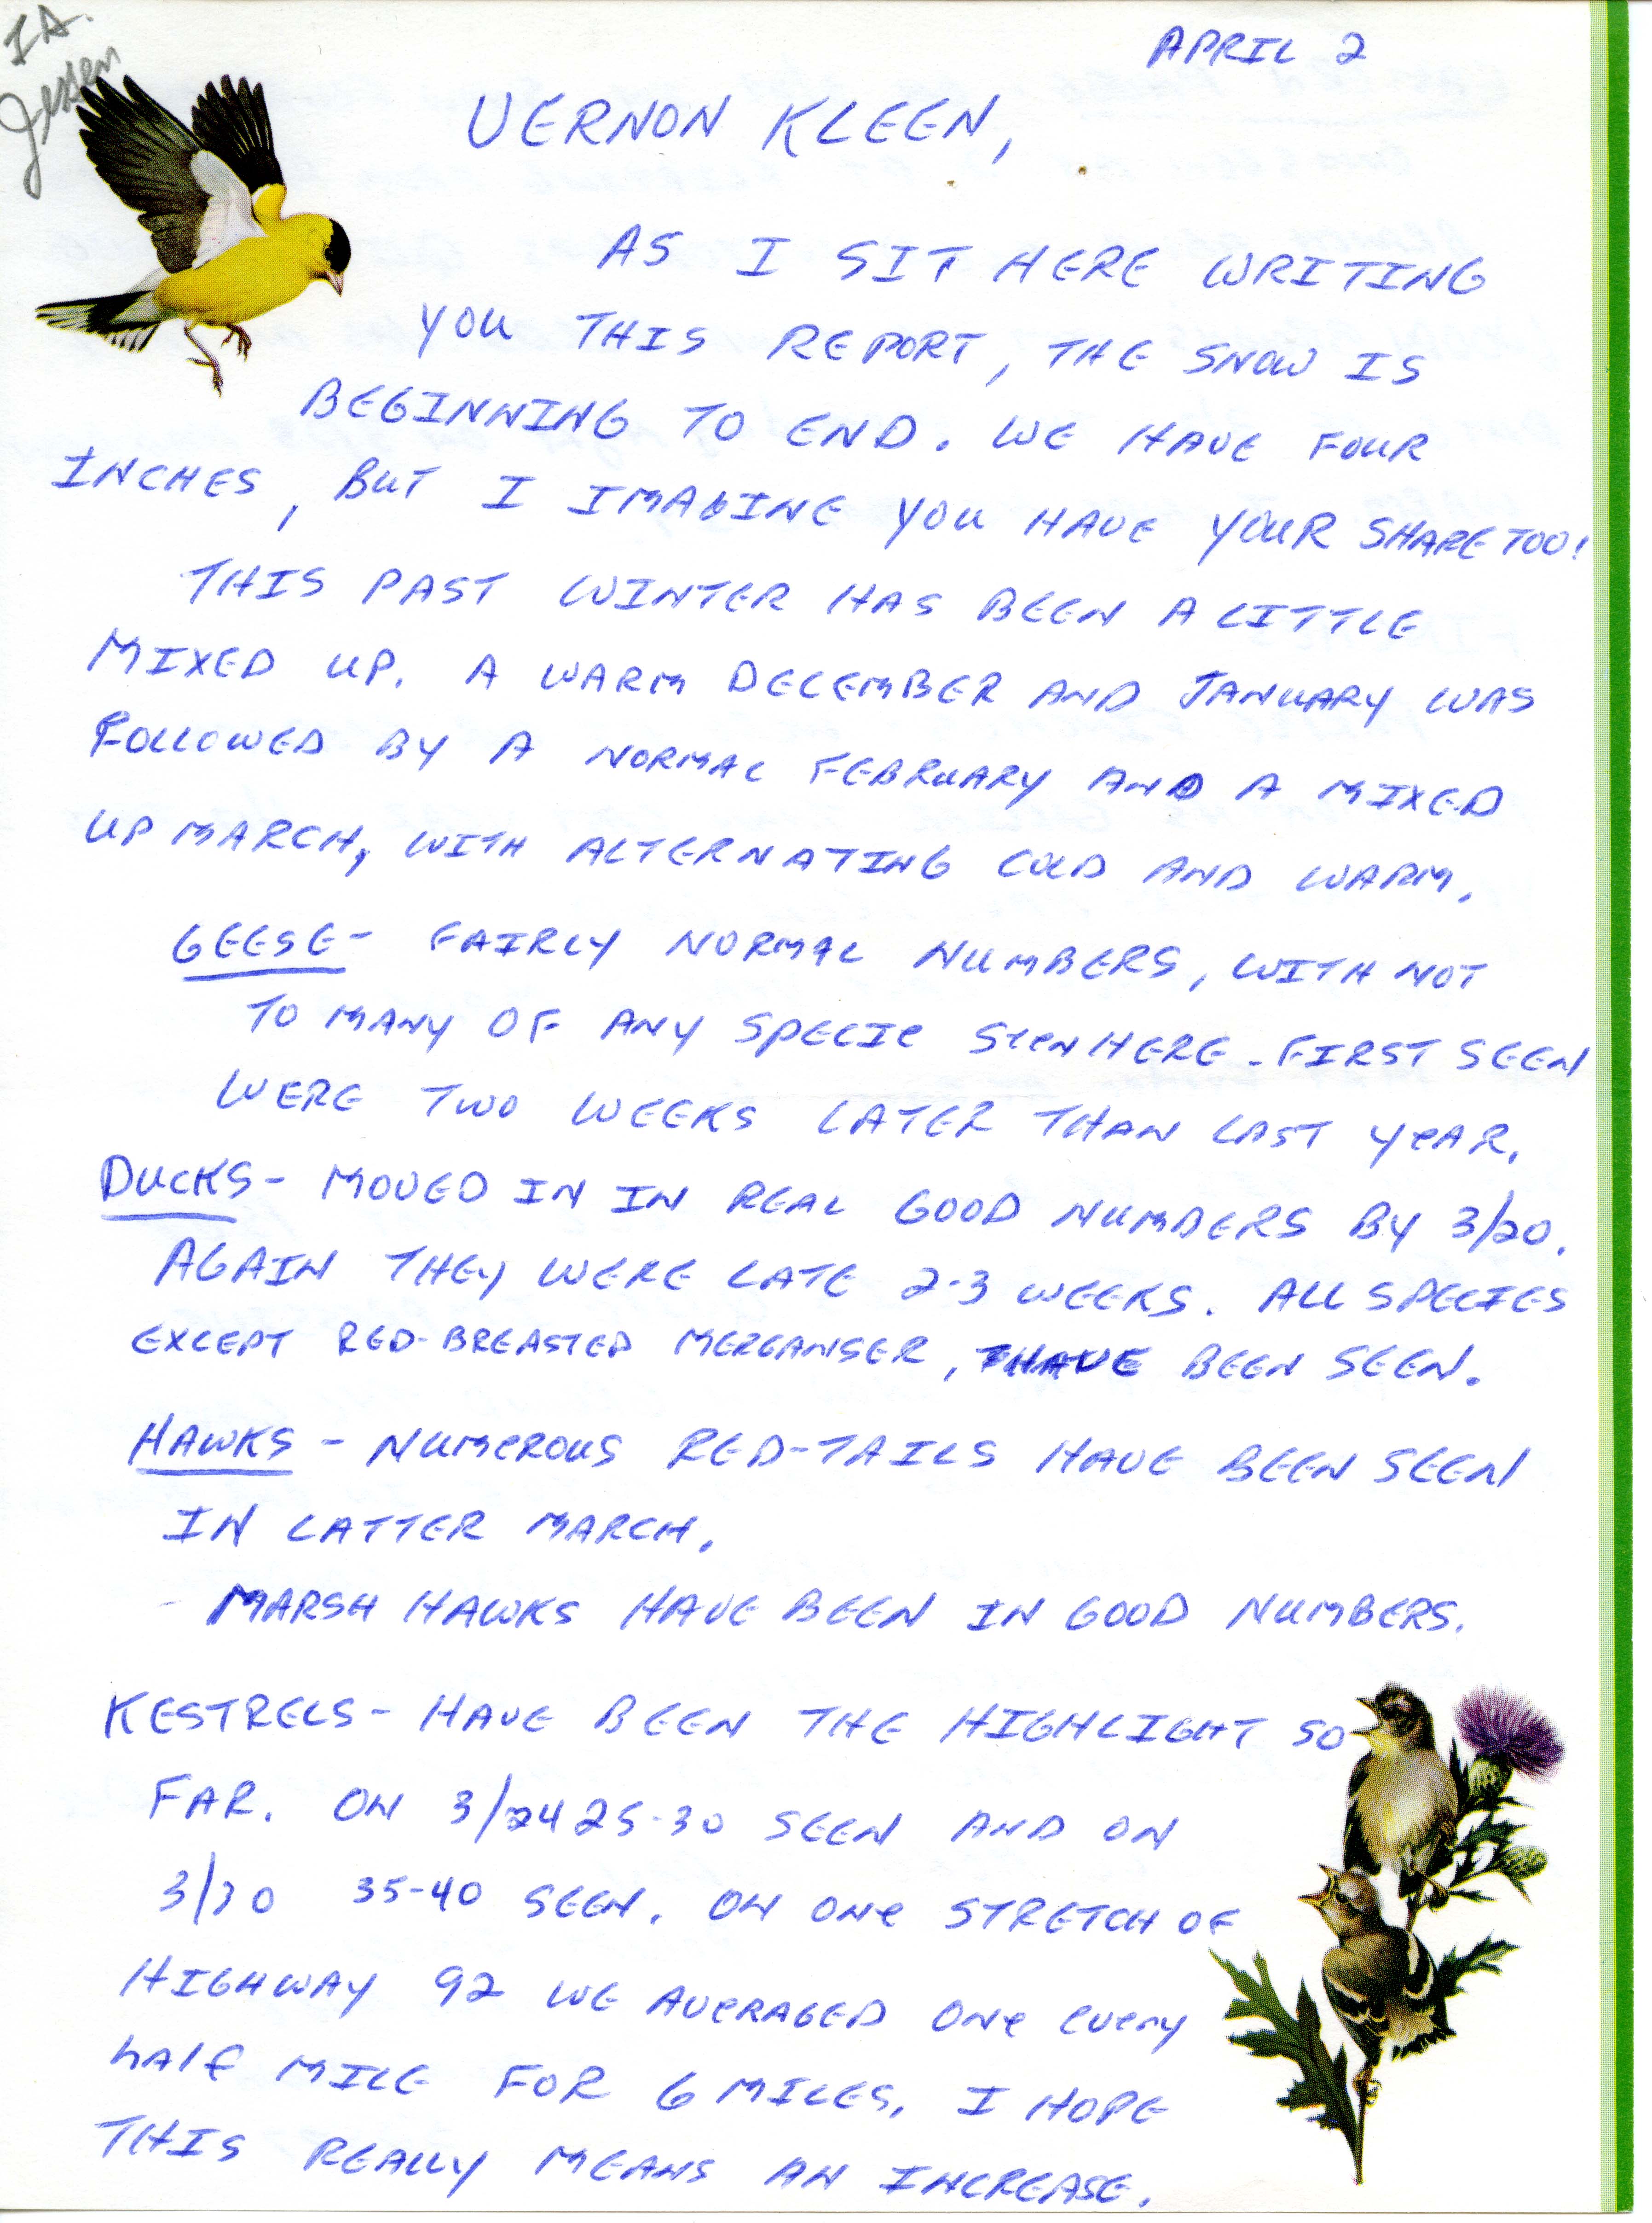 Robert Jessen letter and checklist to Vernon M. Kleen regarding winter birds sighted in Mahaska County, April 2, 1975